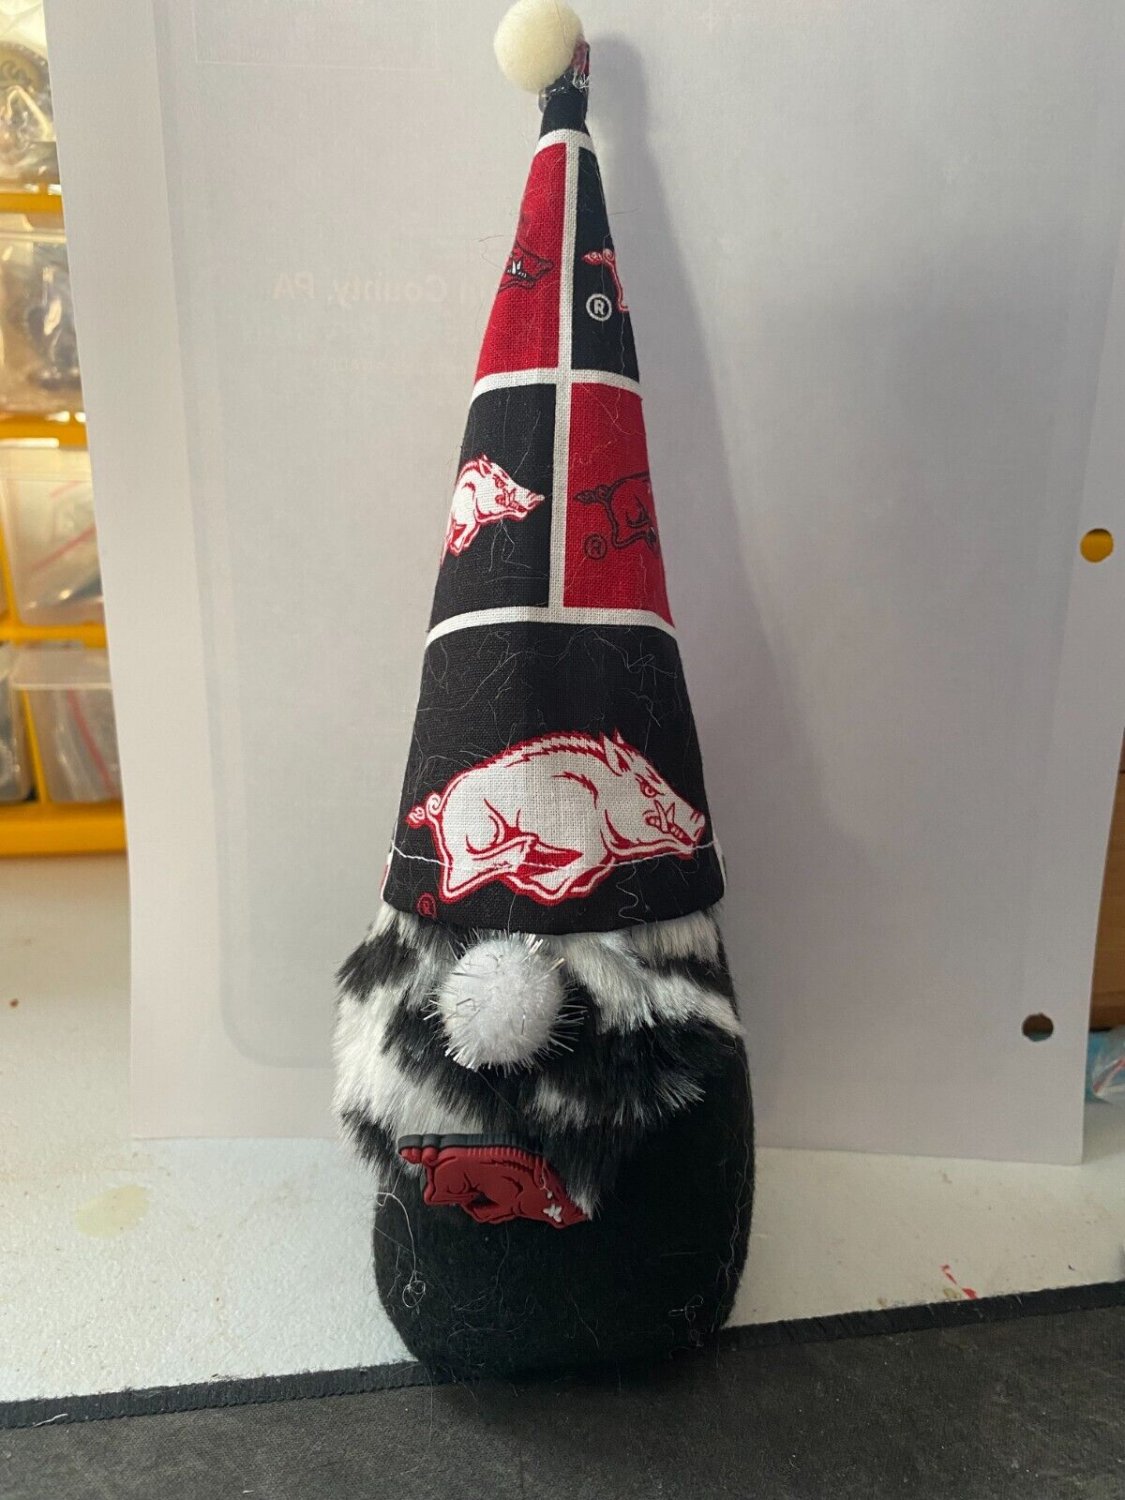 arkansas razorbacks handmade 8 inch gnome